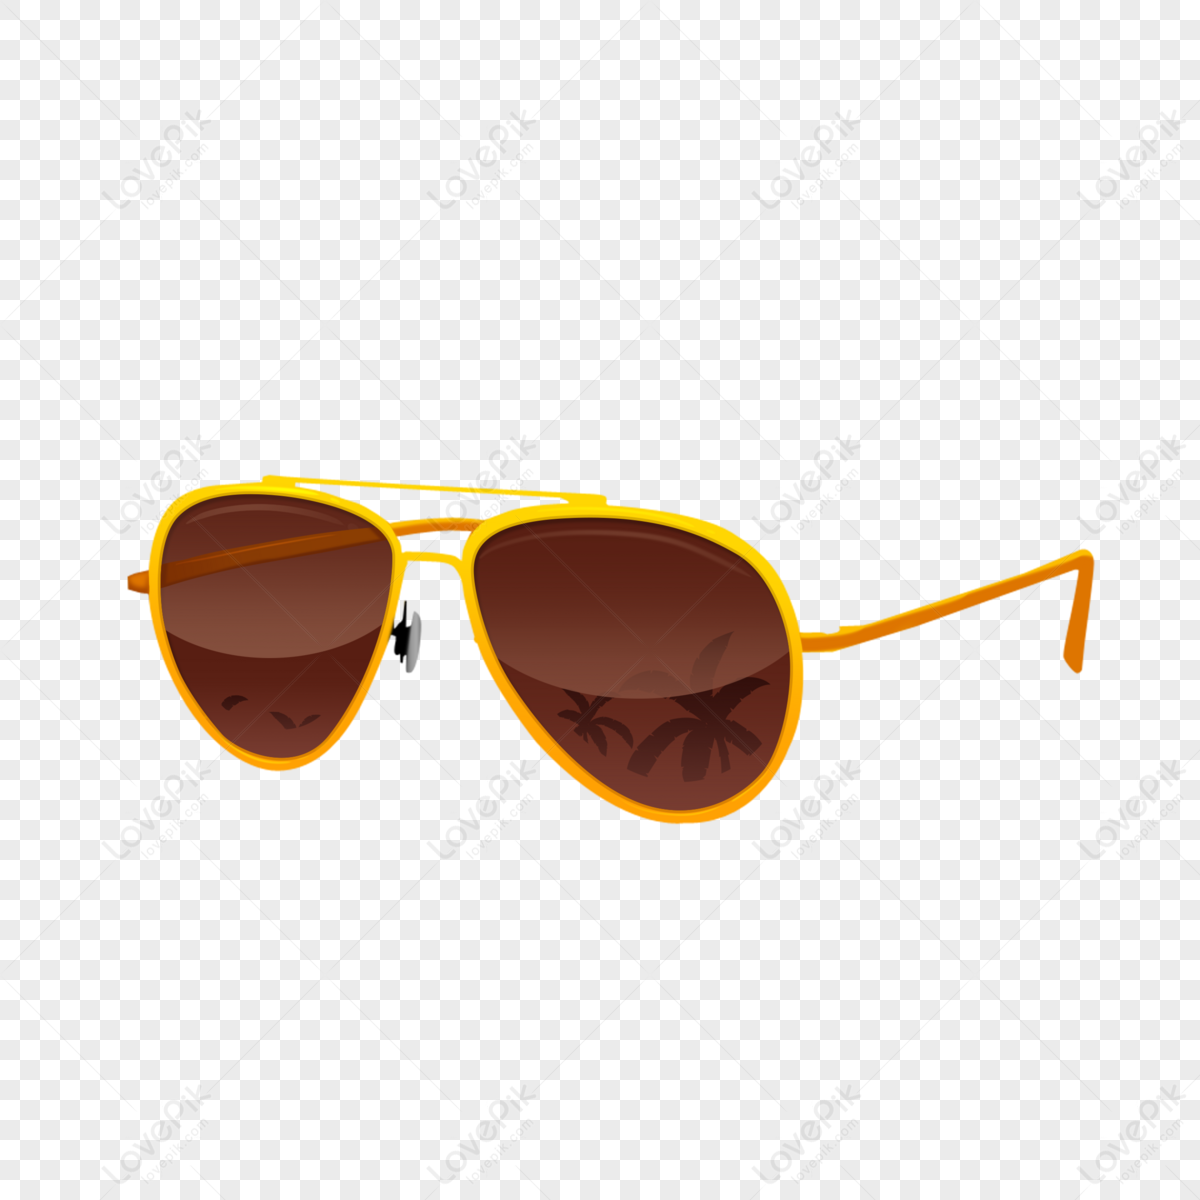 Sunglasses Clipart png download - 1430*1537 - Free Transparent Louis Vuitton  png Download. - CleanPNG / KissPNG